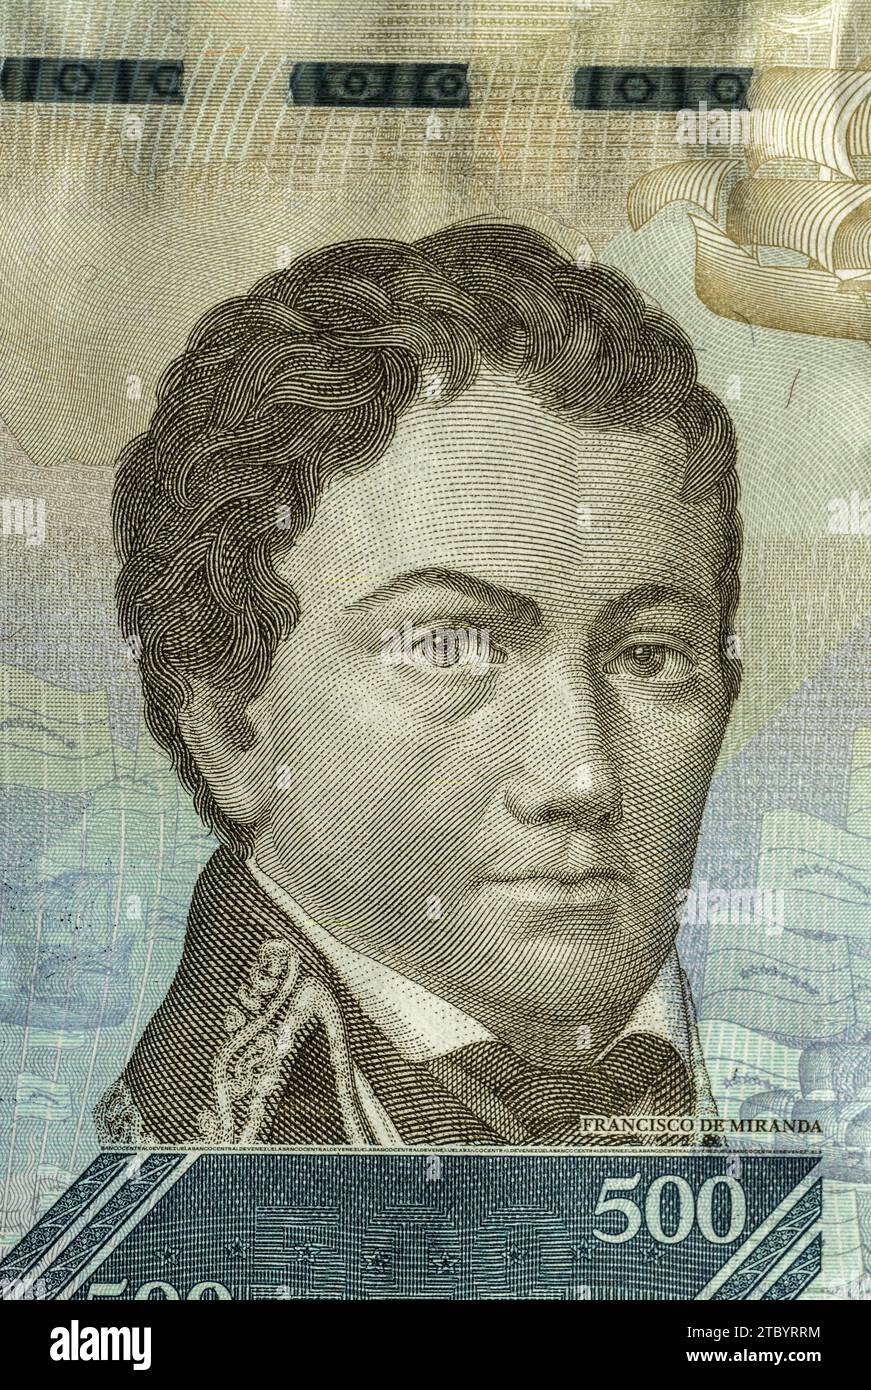 Image of Francisco de Miranda on the banknote of 500 Venezuelan bolivars. Stock Photo